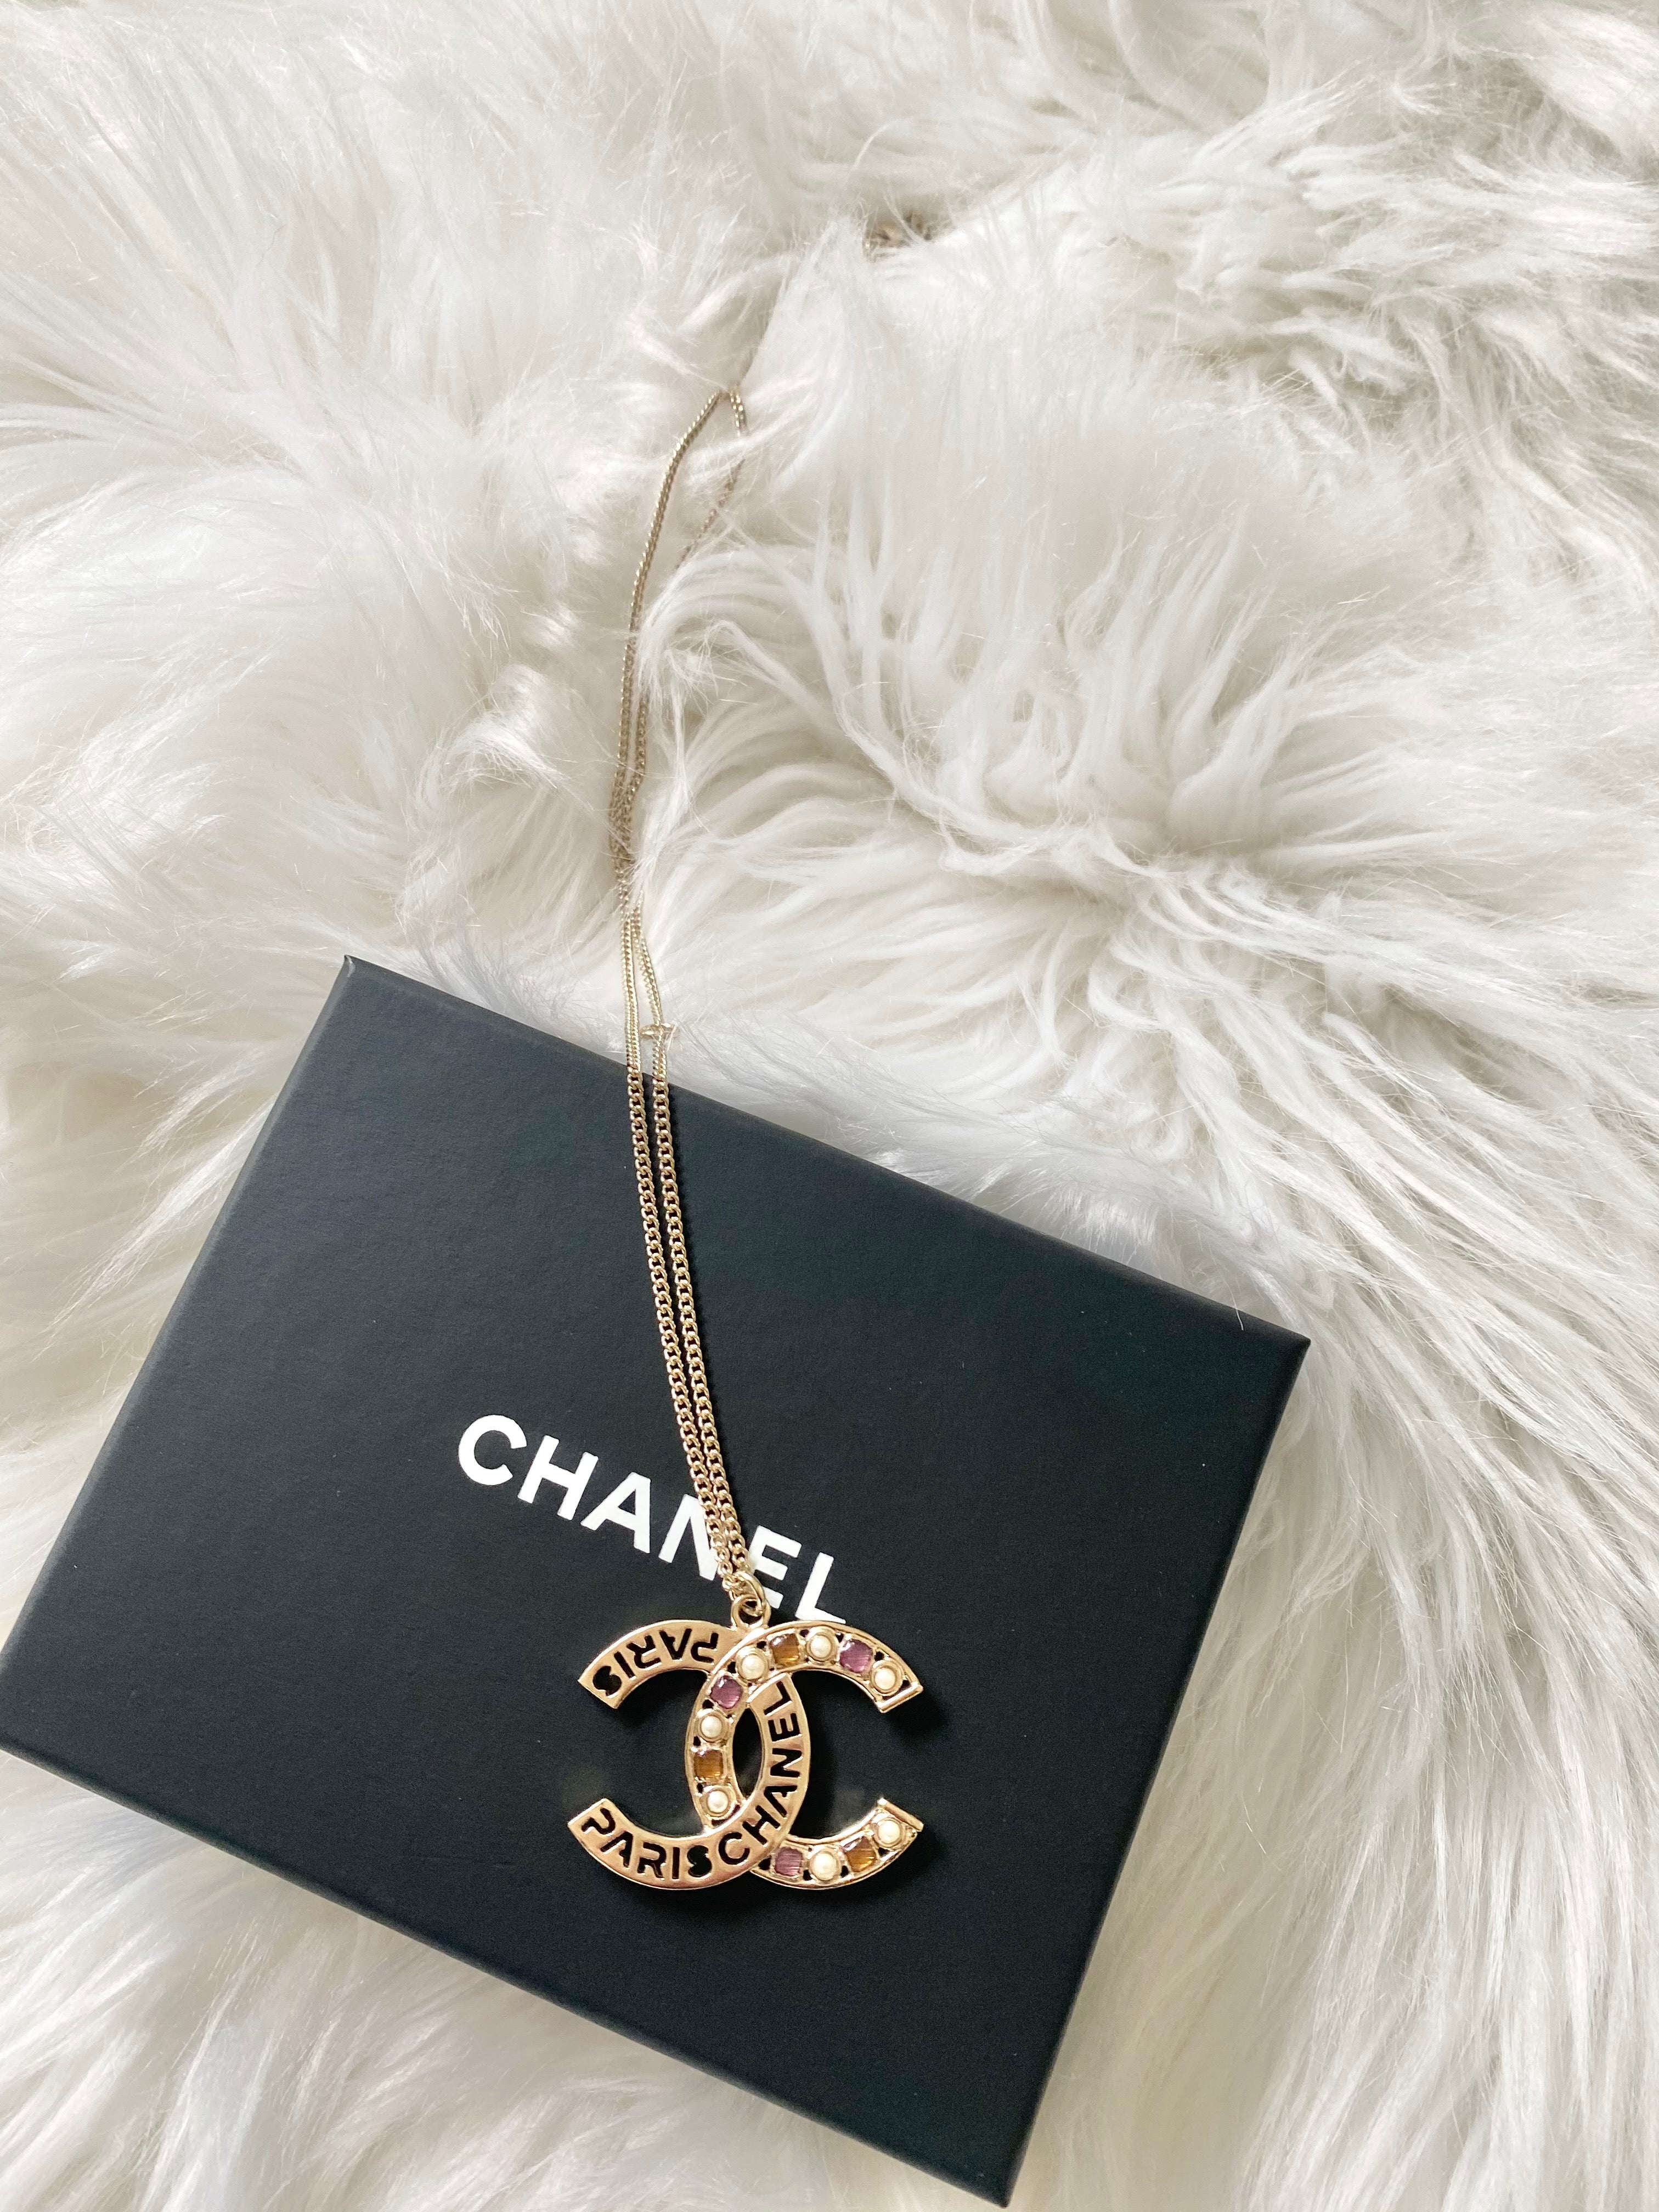 Chanel logo necklace – Beccas Bags